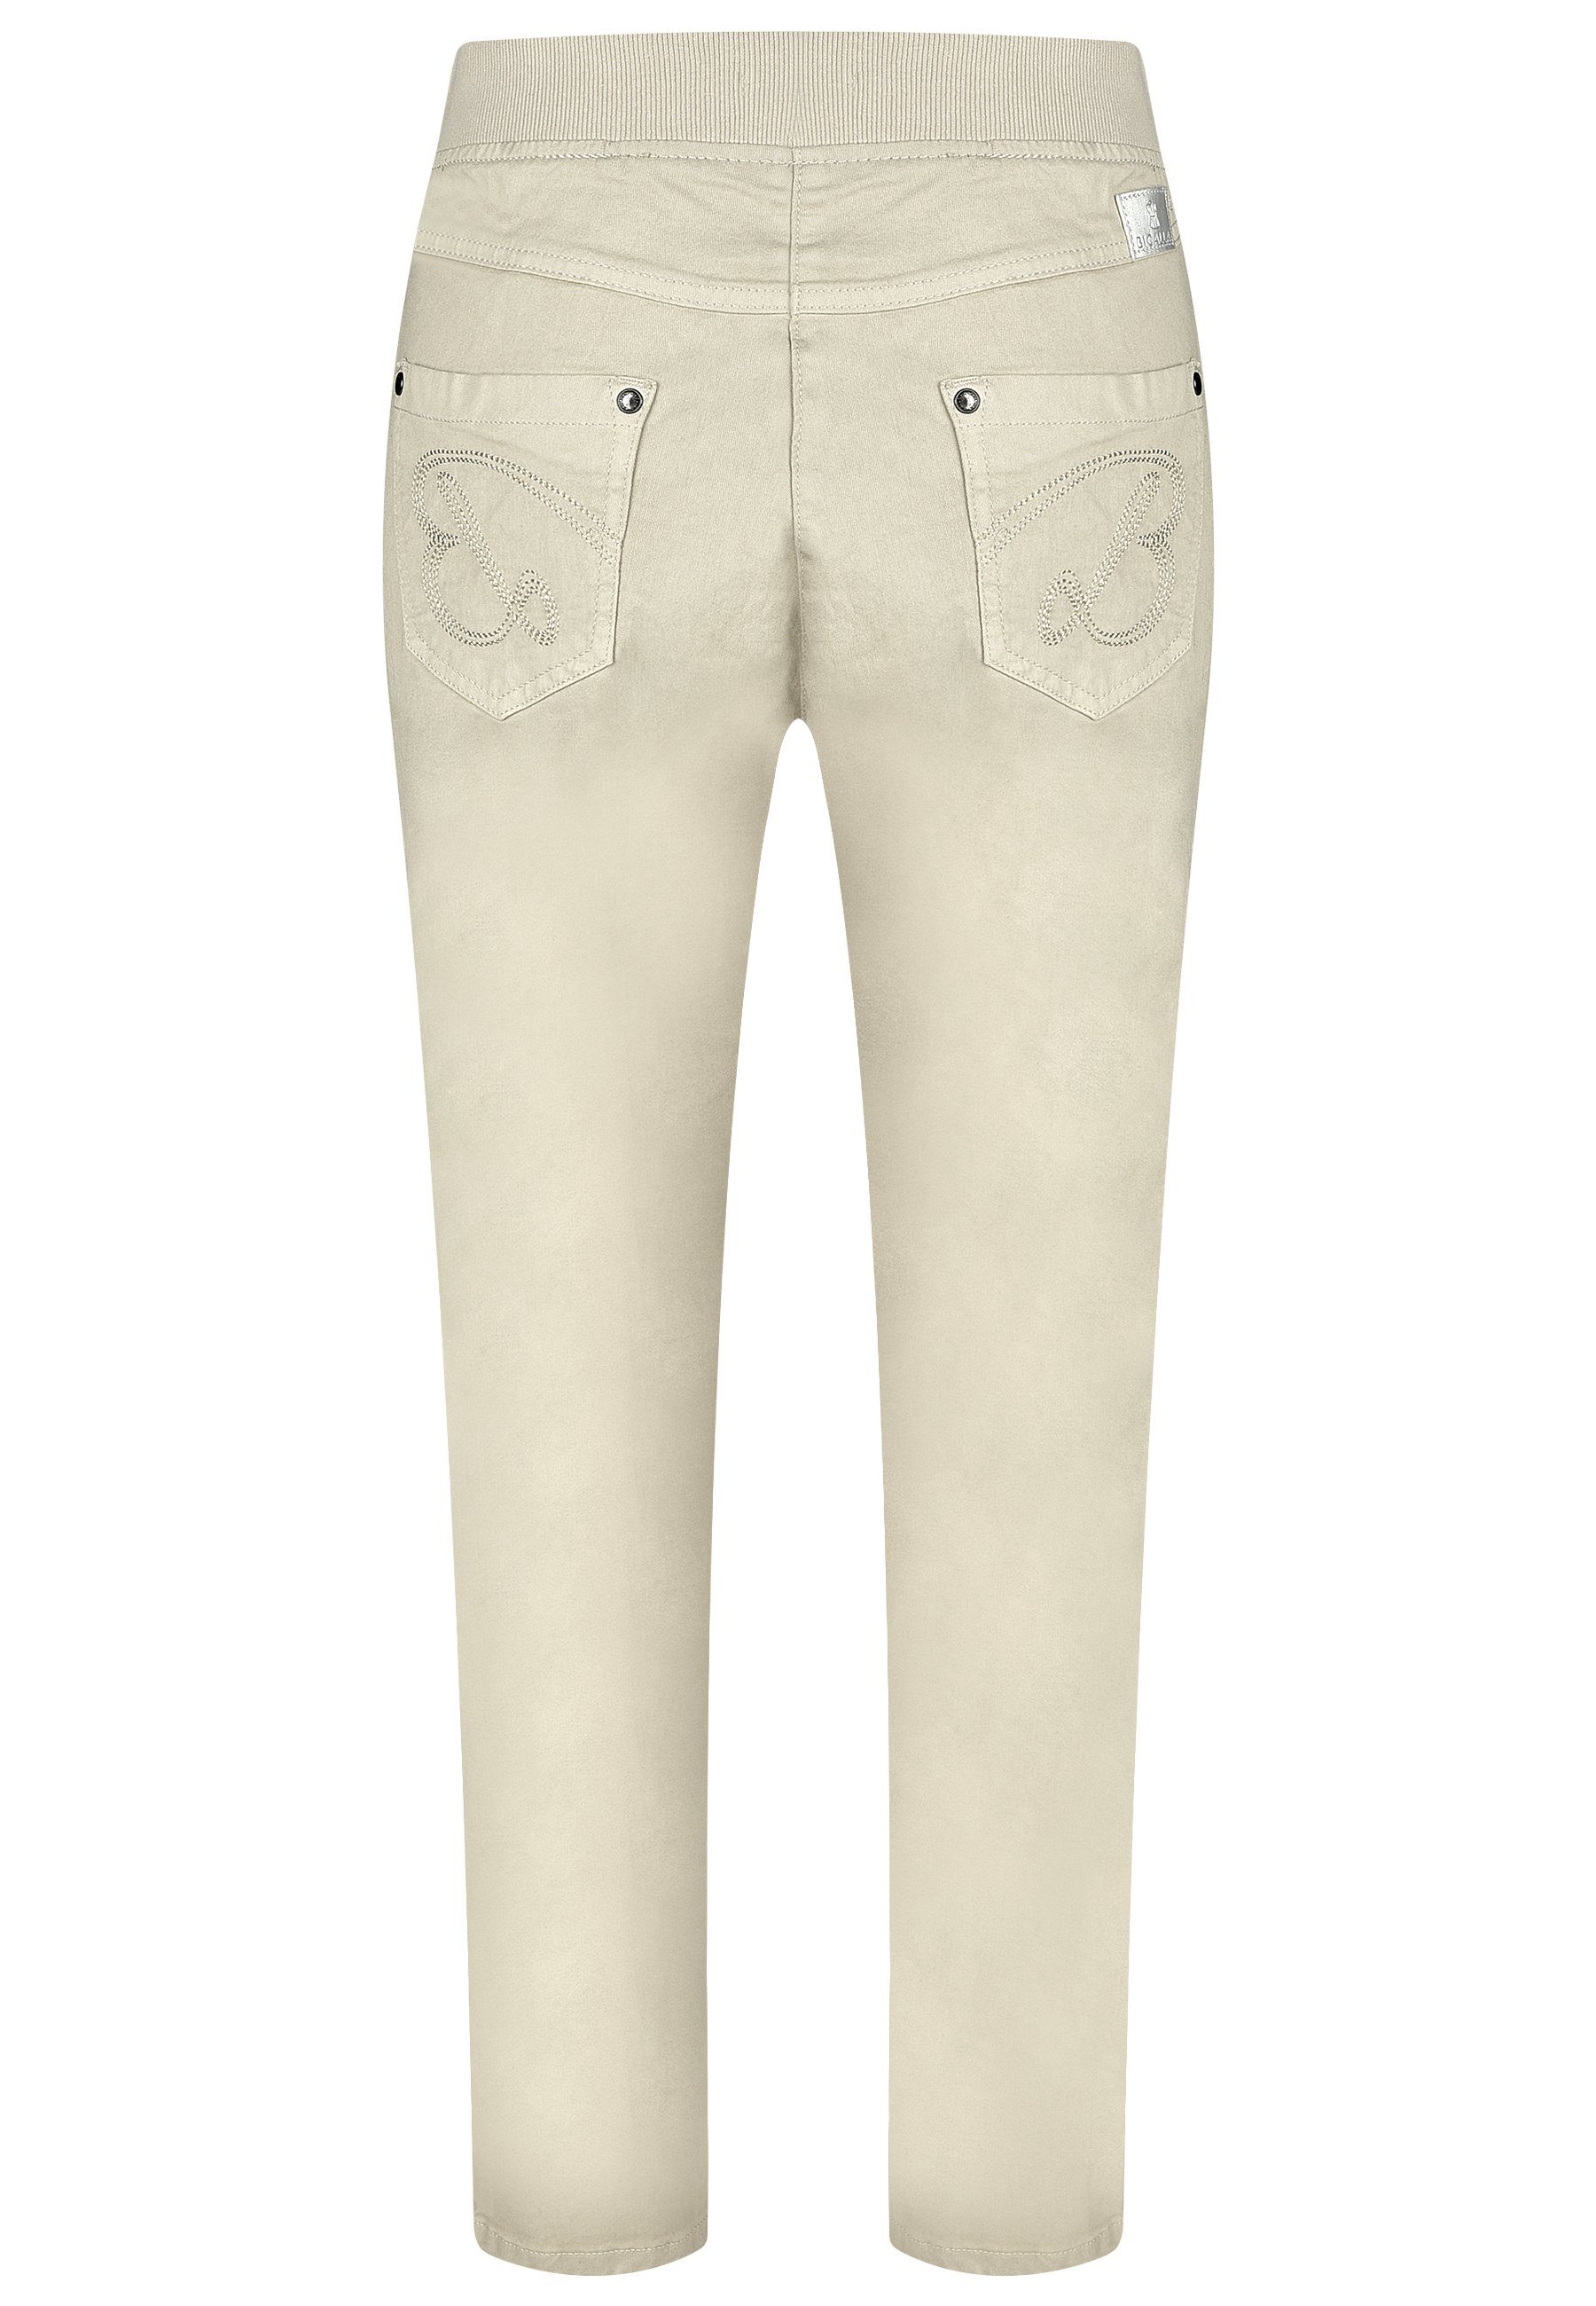 BICALLA Regular-fit-Jeans - Comfort 30 06/moonbeam (1-tlg)